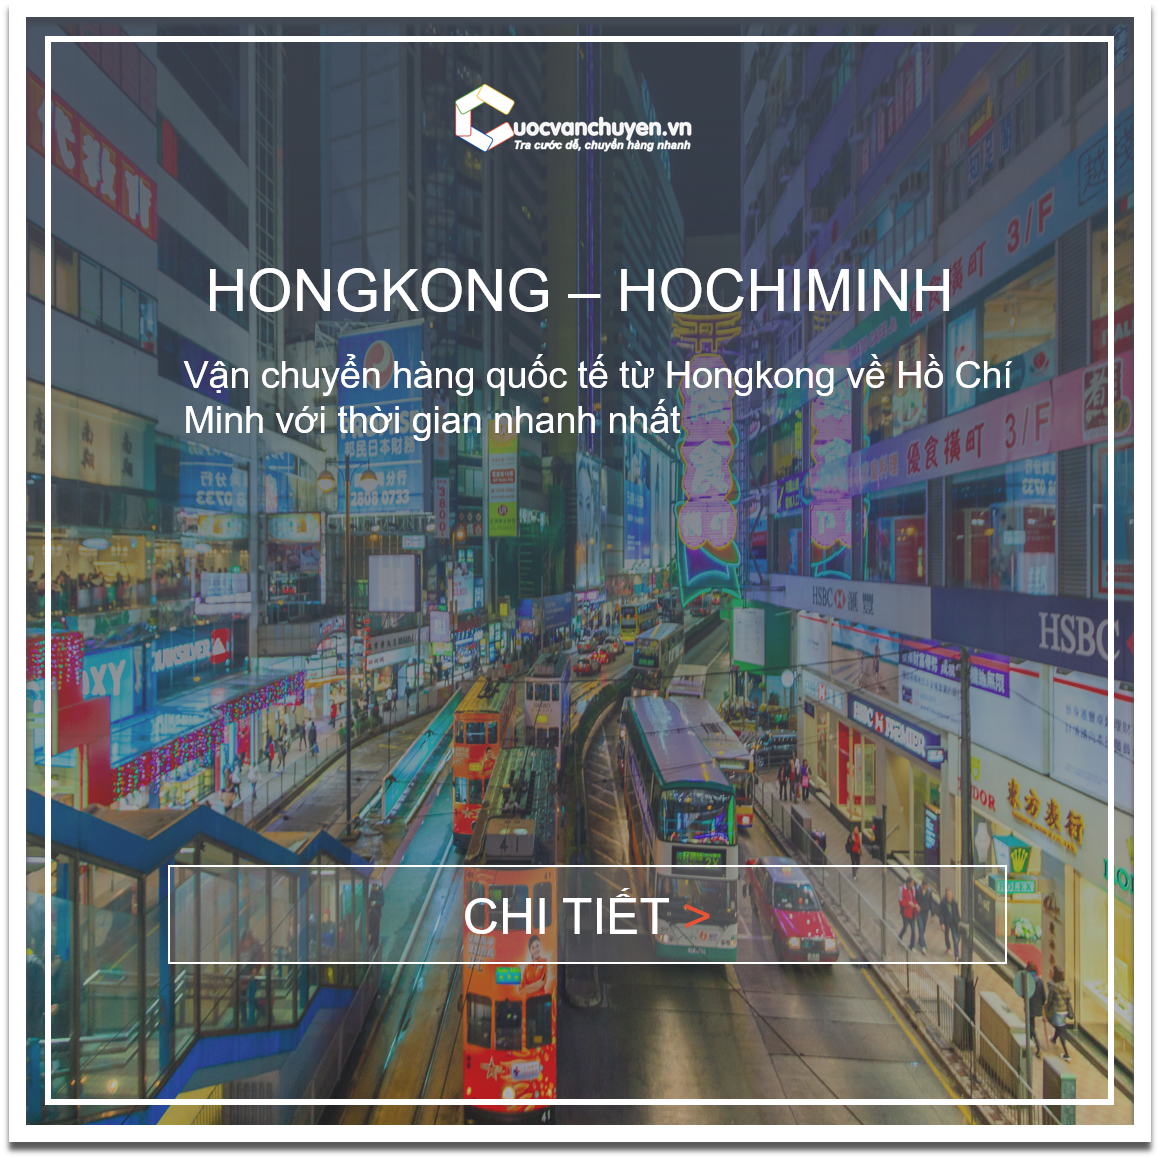 [Image: hongkong-hochiminh-cuocvanchuyen_vn(1).png]